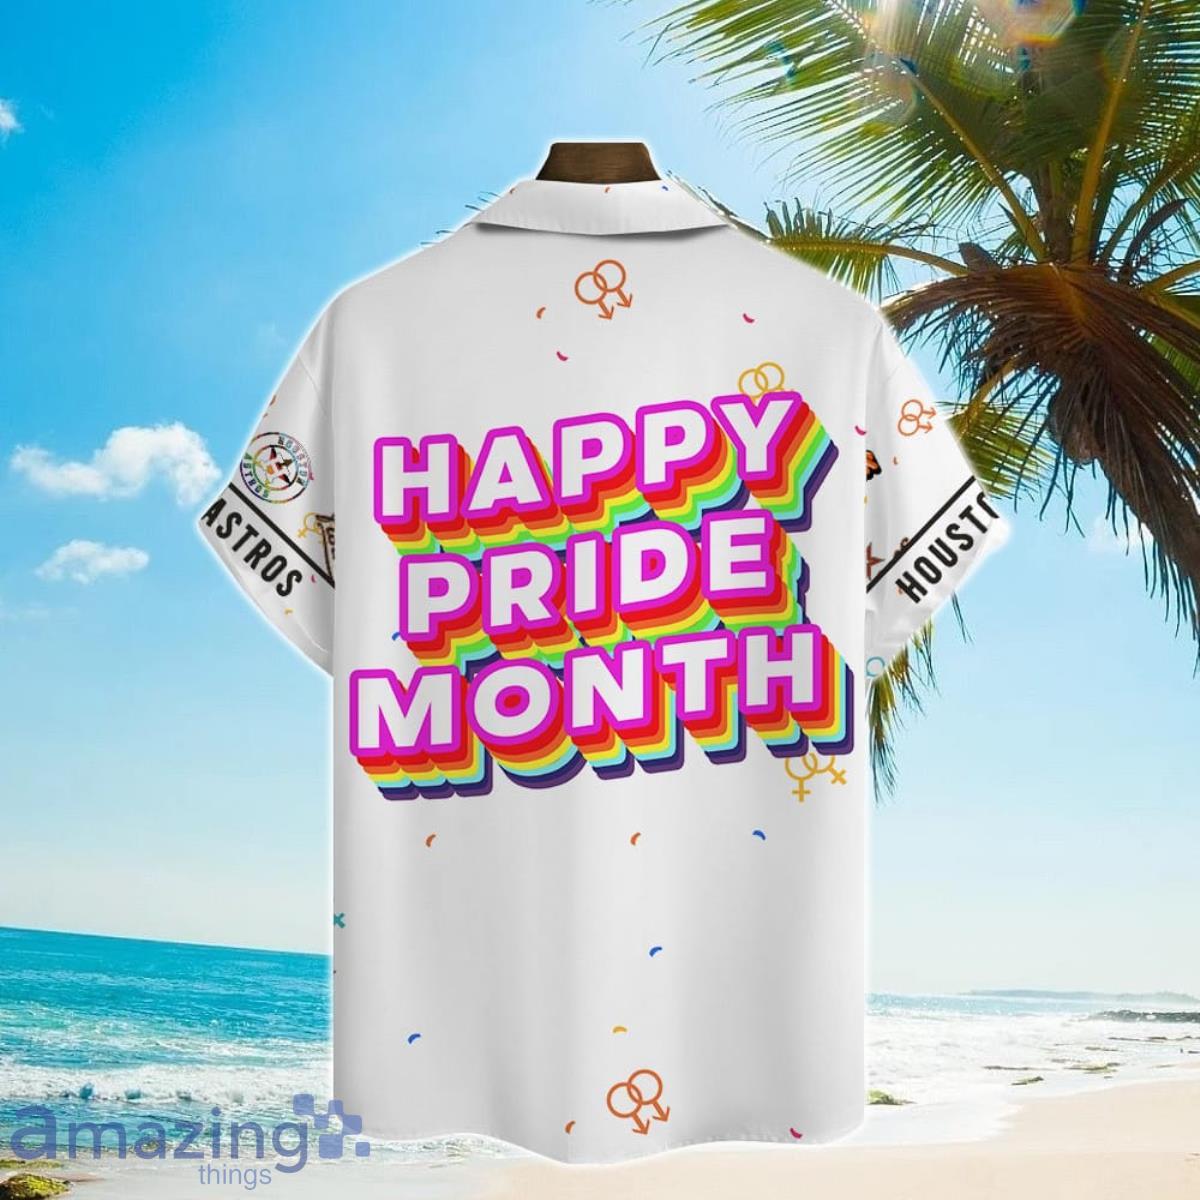 houston astros pride shirt